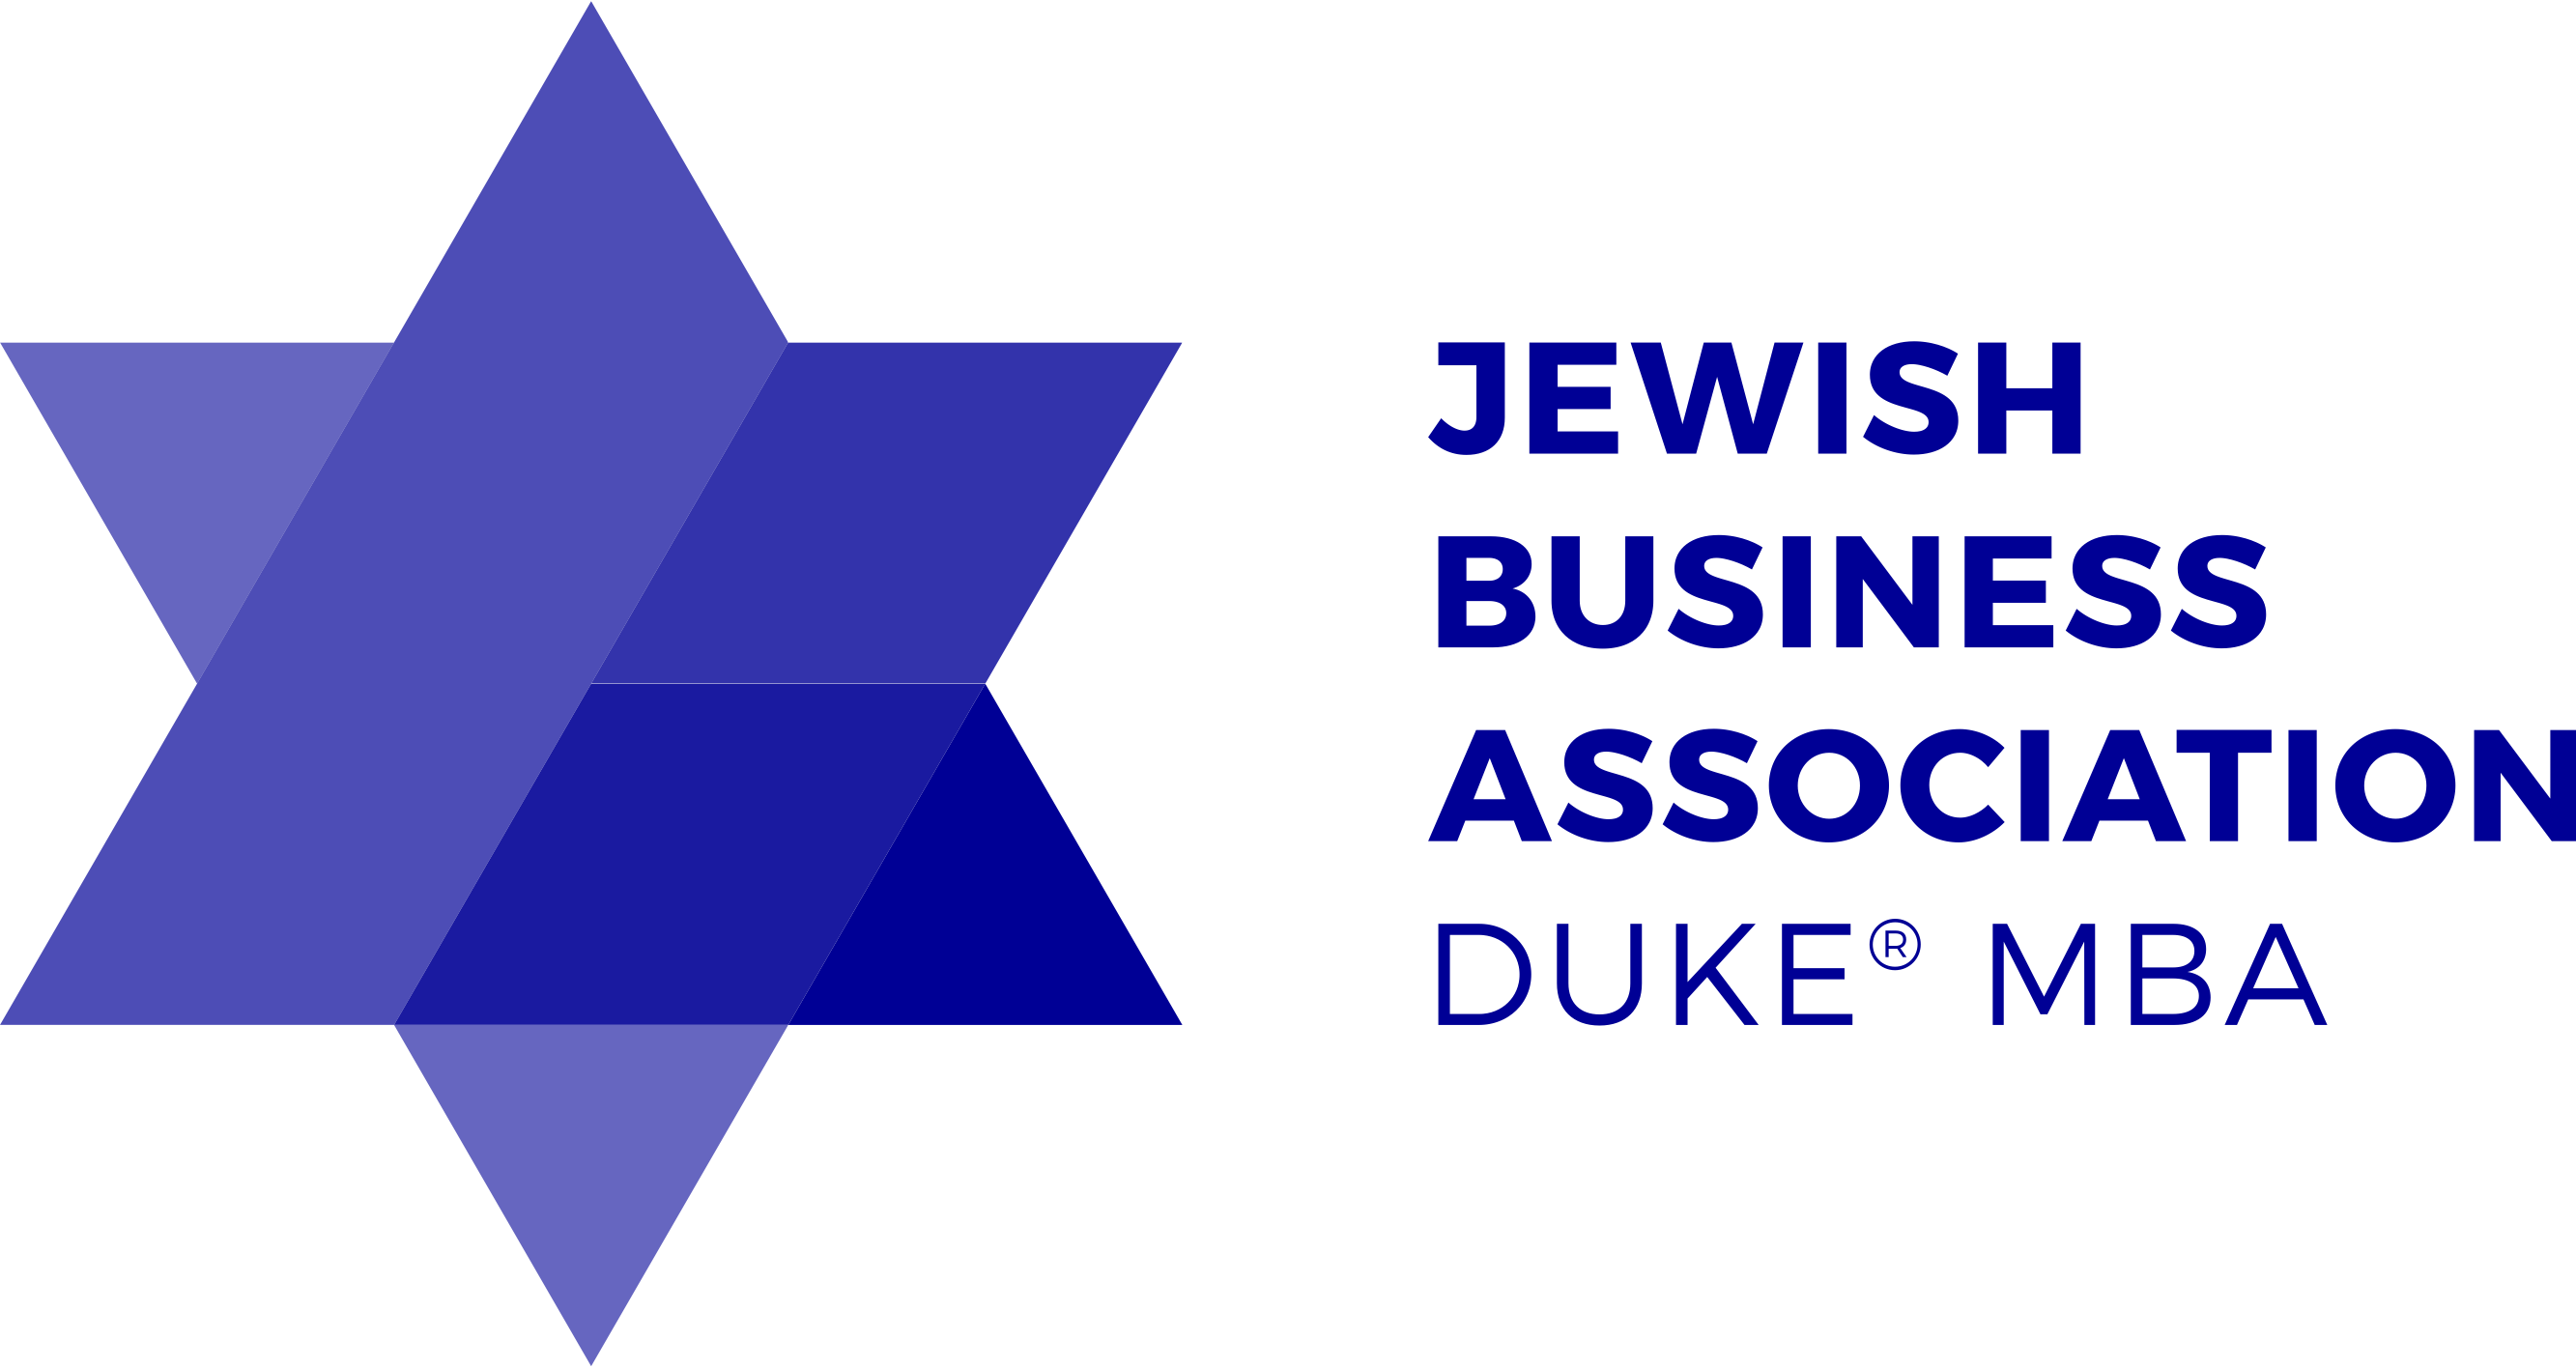 Contact Jewish Business Association